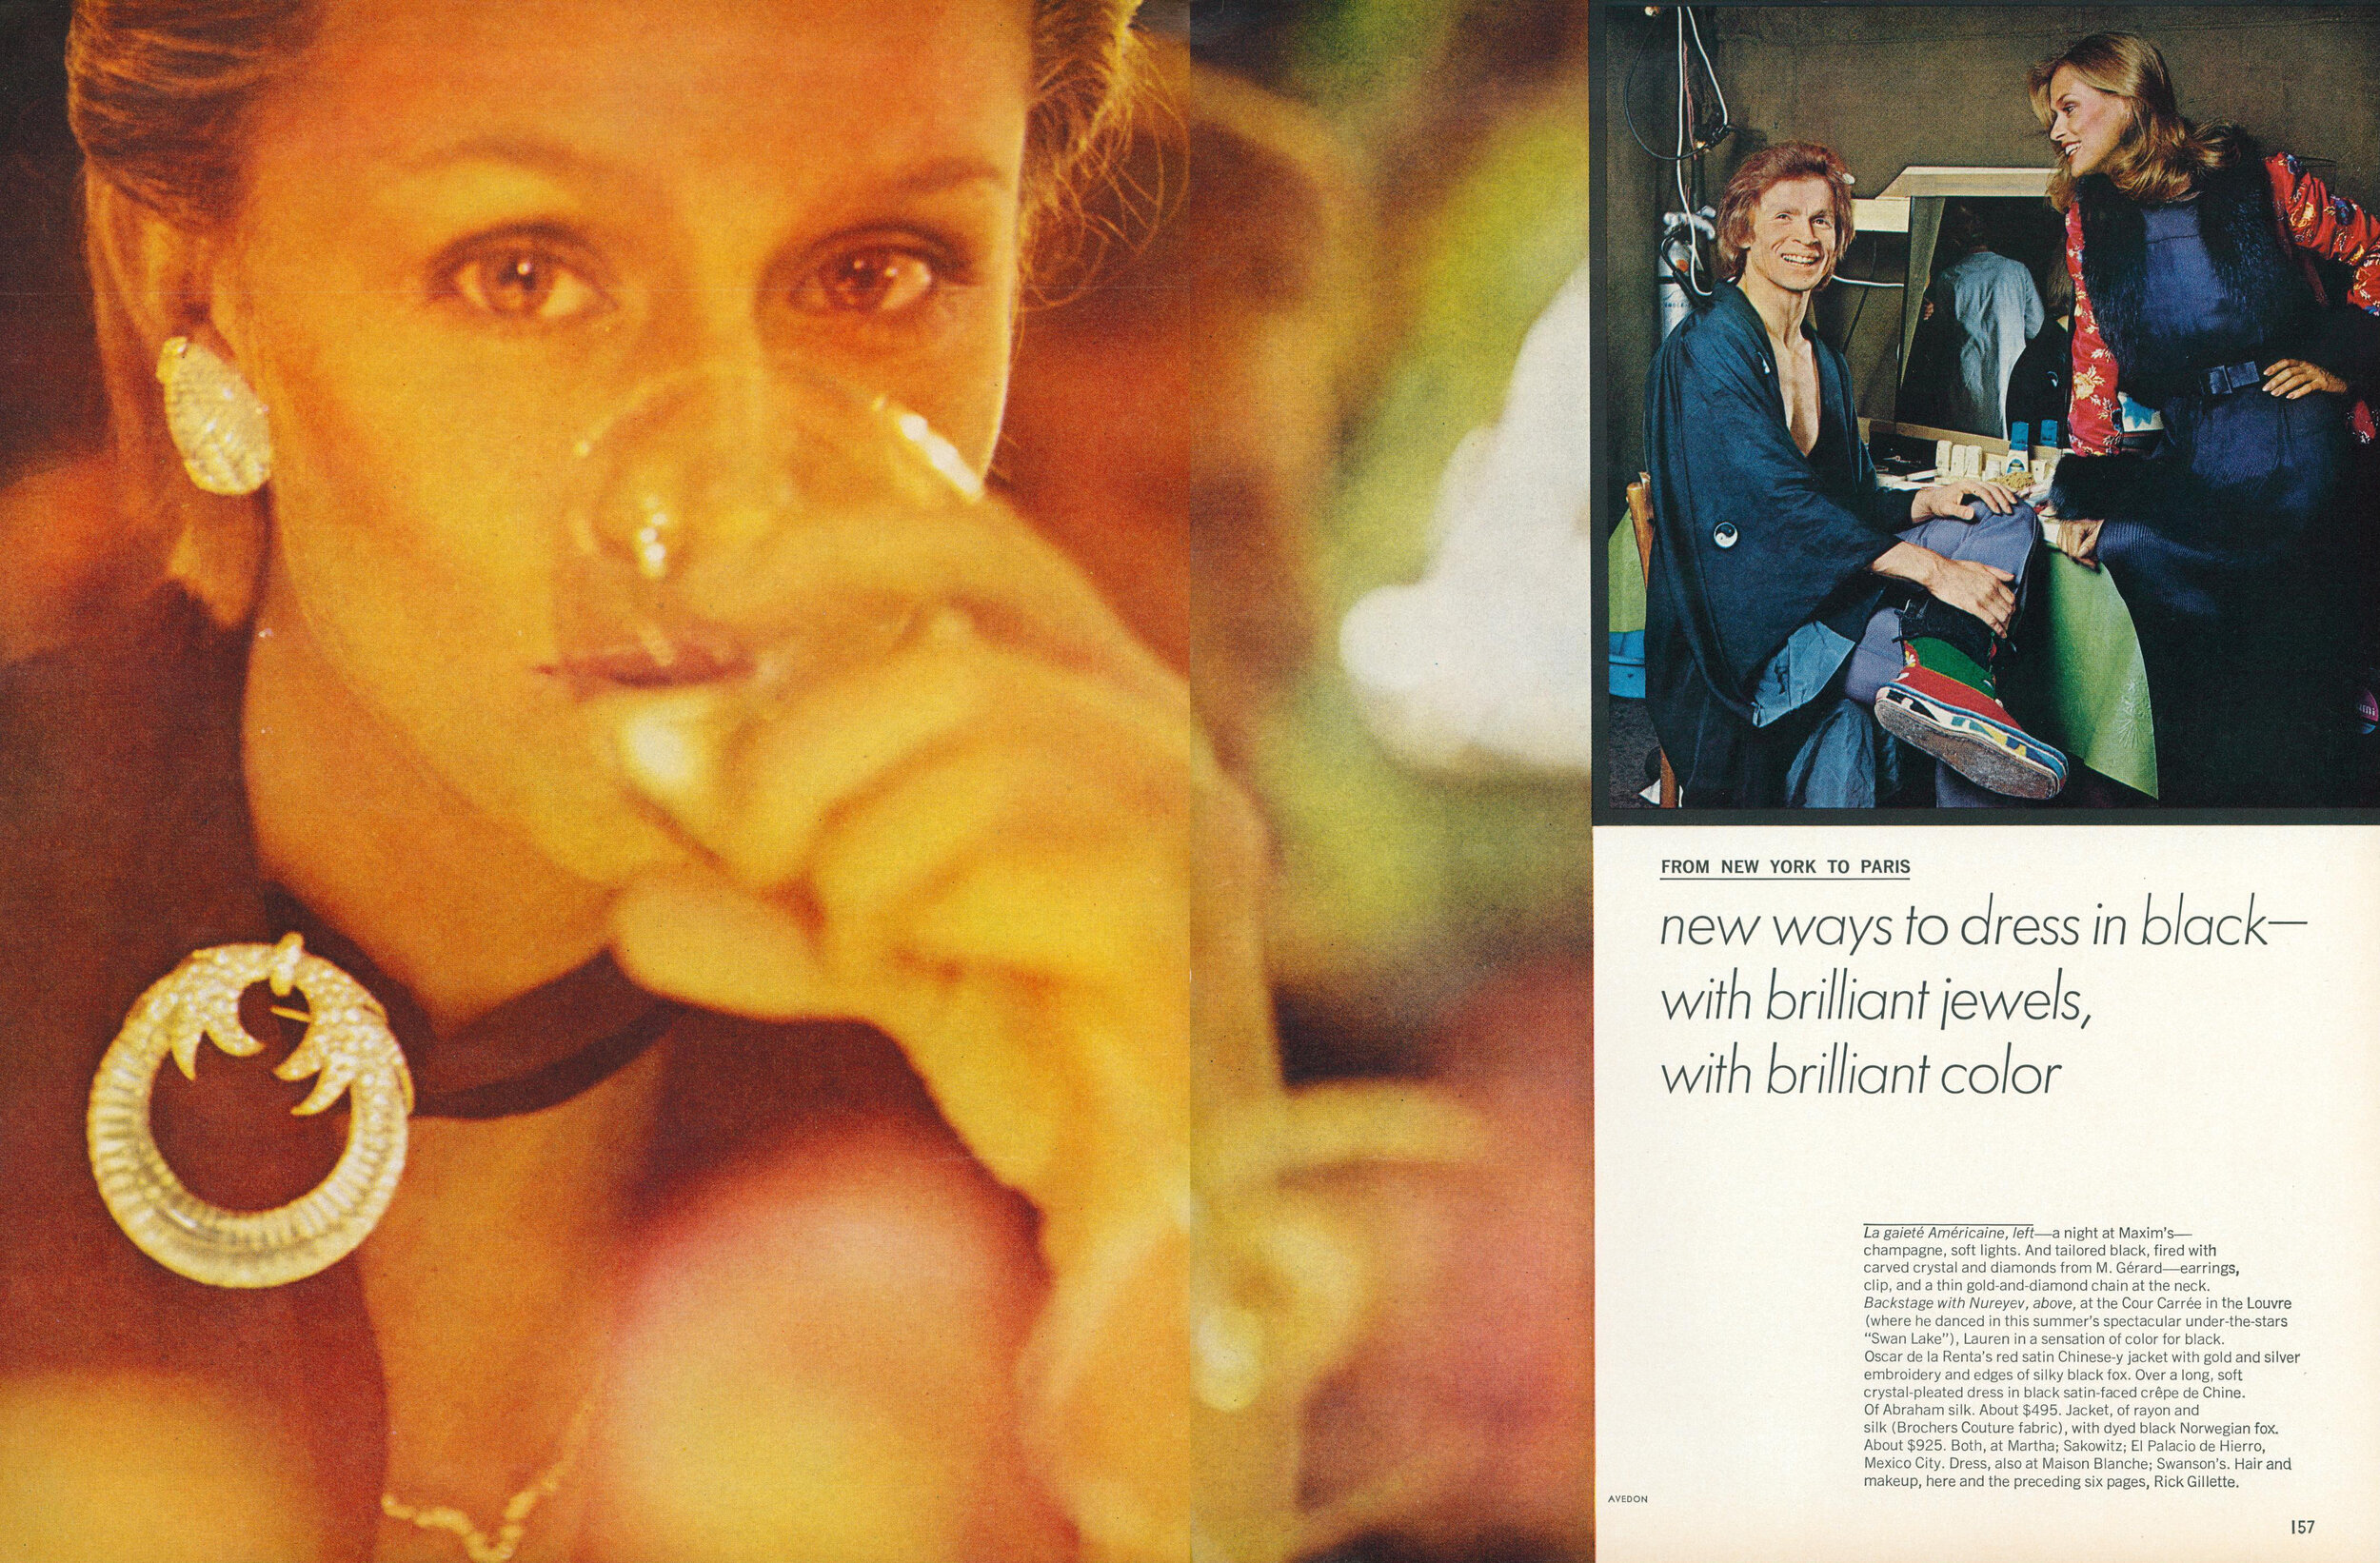 Vogue (Oct 1, 1973)_AVEDON_HUTTON_GILLETTE_157.jpg